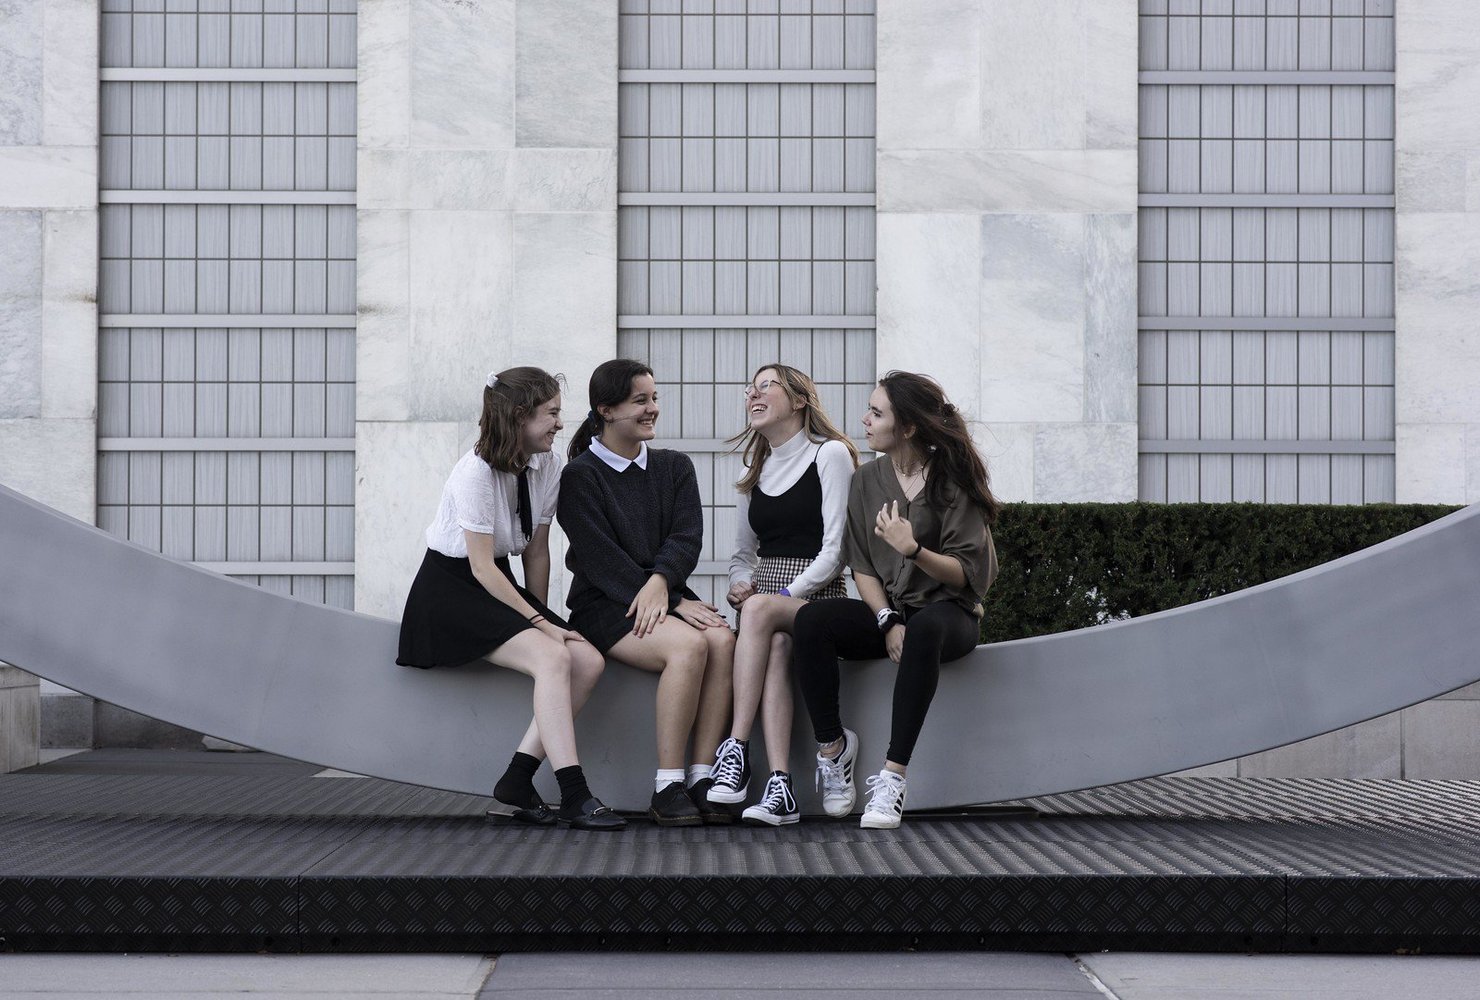 Peace Bench Sculpture for the UN Headquarters / Snøhetta